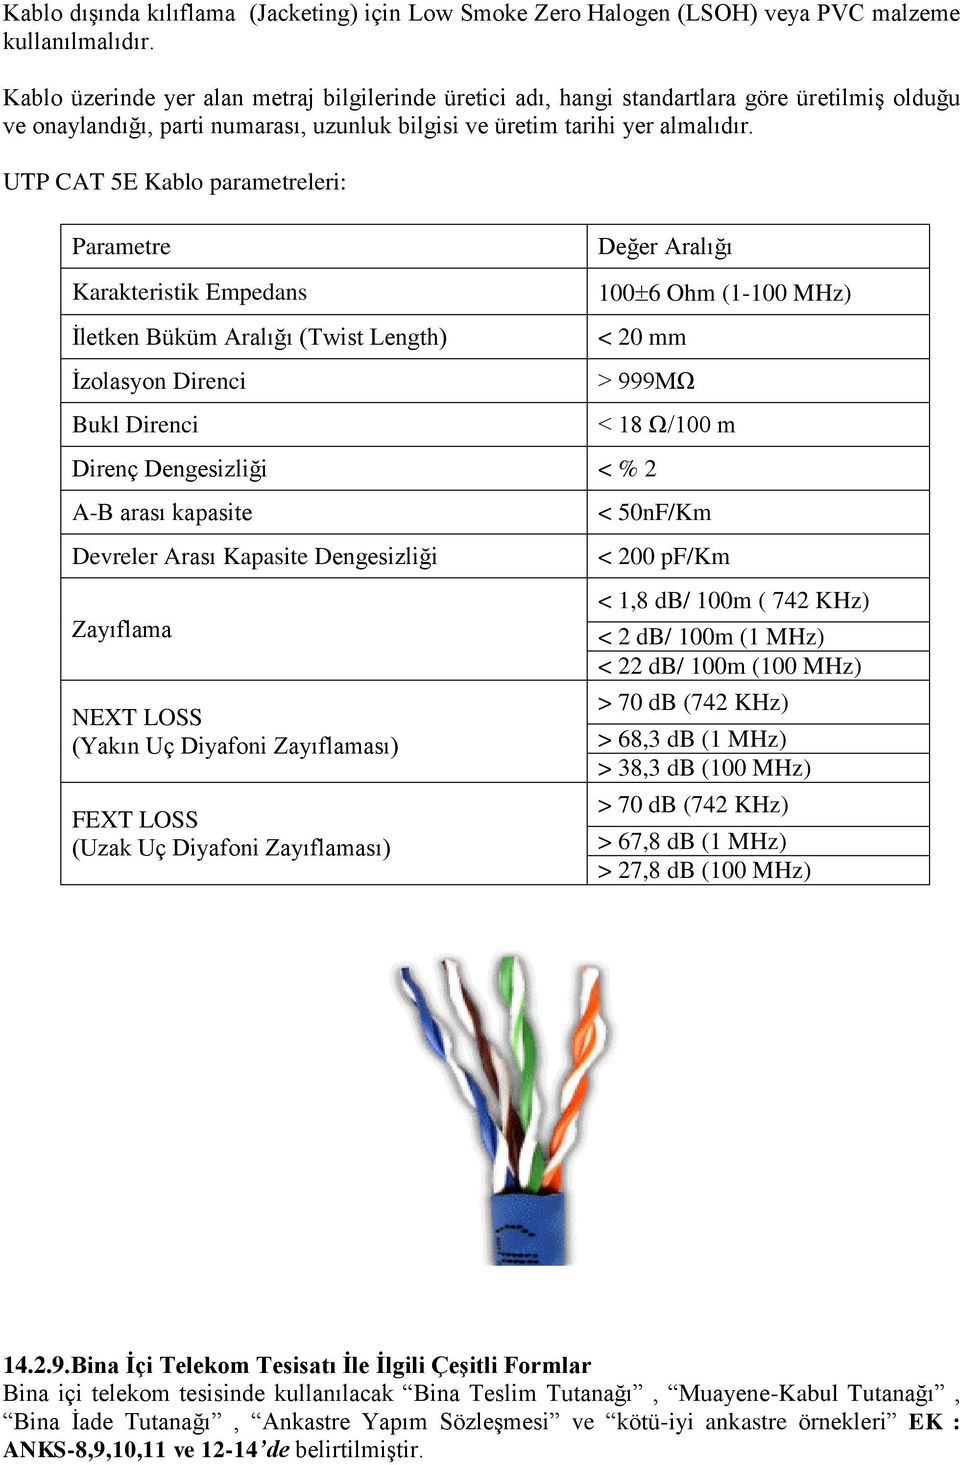 U CAT 5E ablo parametreleri: Parametre arakteristik Empedans Ġletken Büküm Aralığı (Twist Length) Ġzolasyon Direnci Bukl Direnci Değer Aralığı 100 6 Ohm (1-100 MHz) < 20 mm > 999MΩ < 18 Ω/100 m